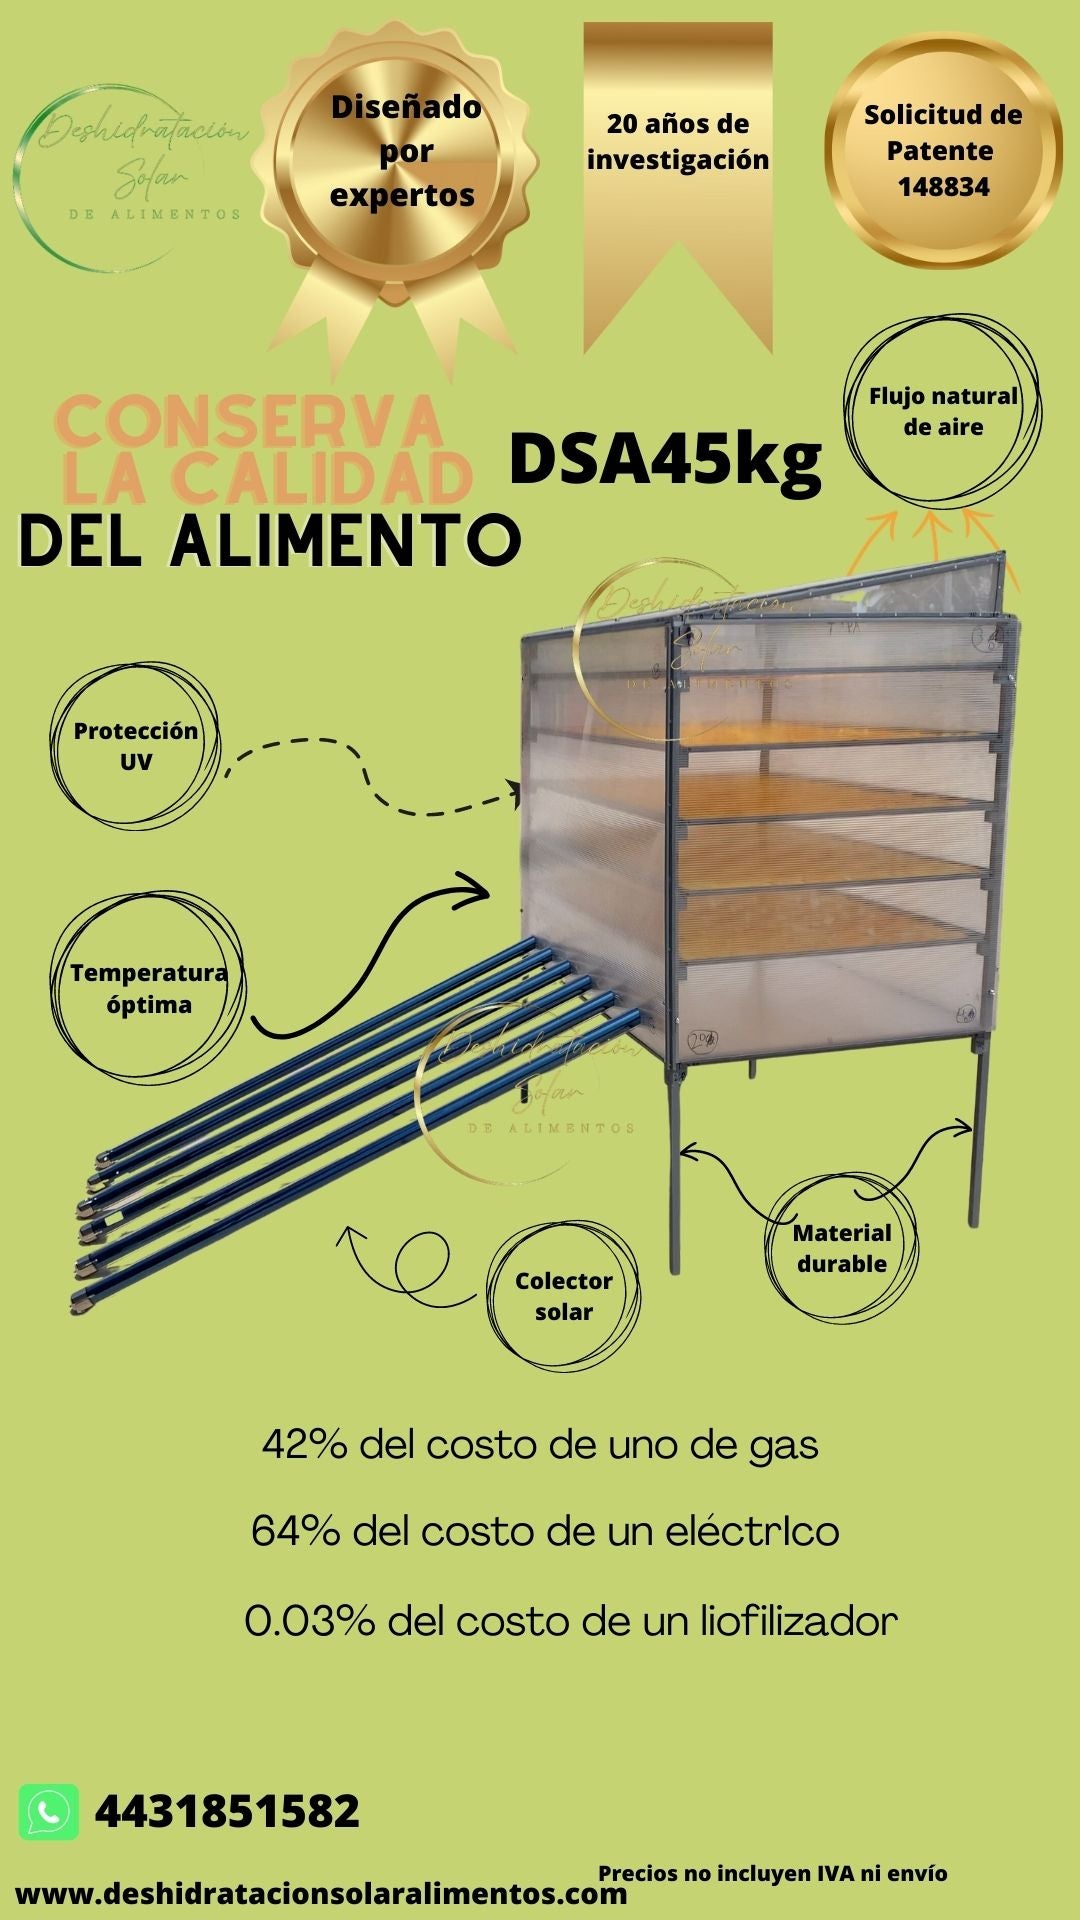 Deshidratador Solar de Alimentos DSA45kg